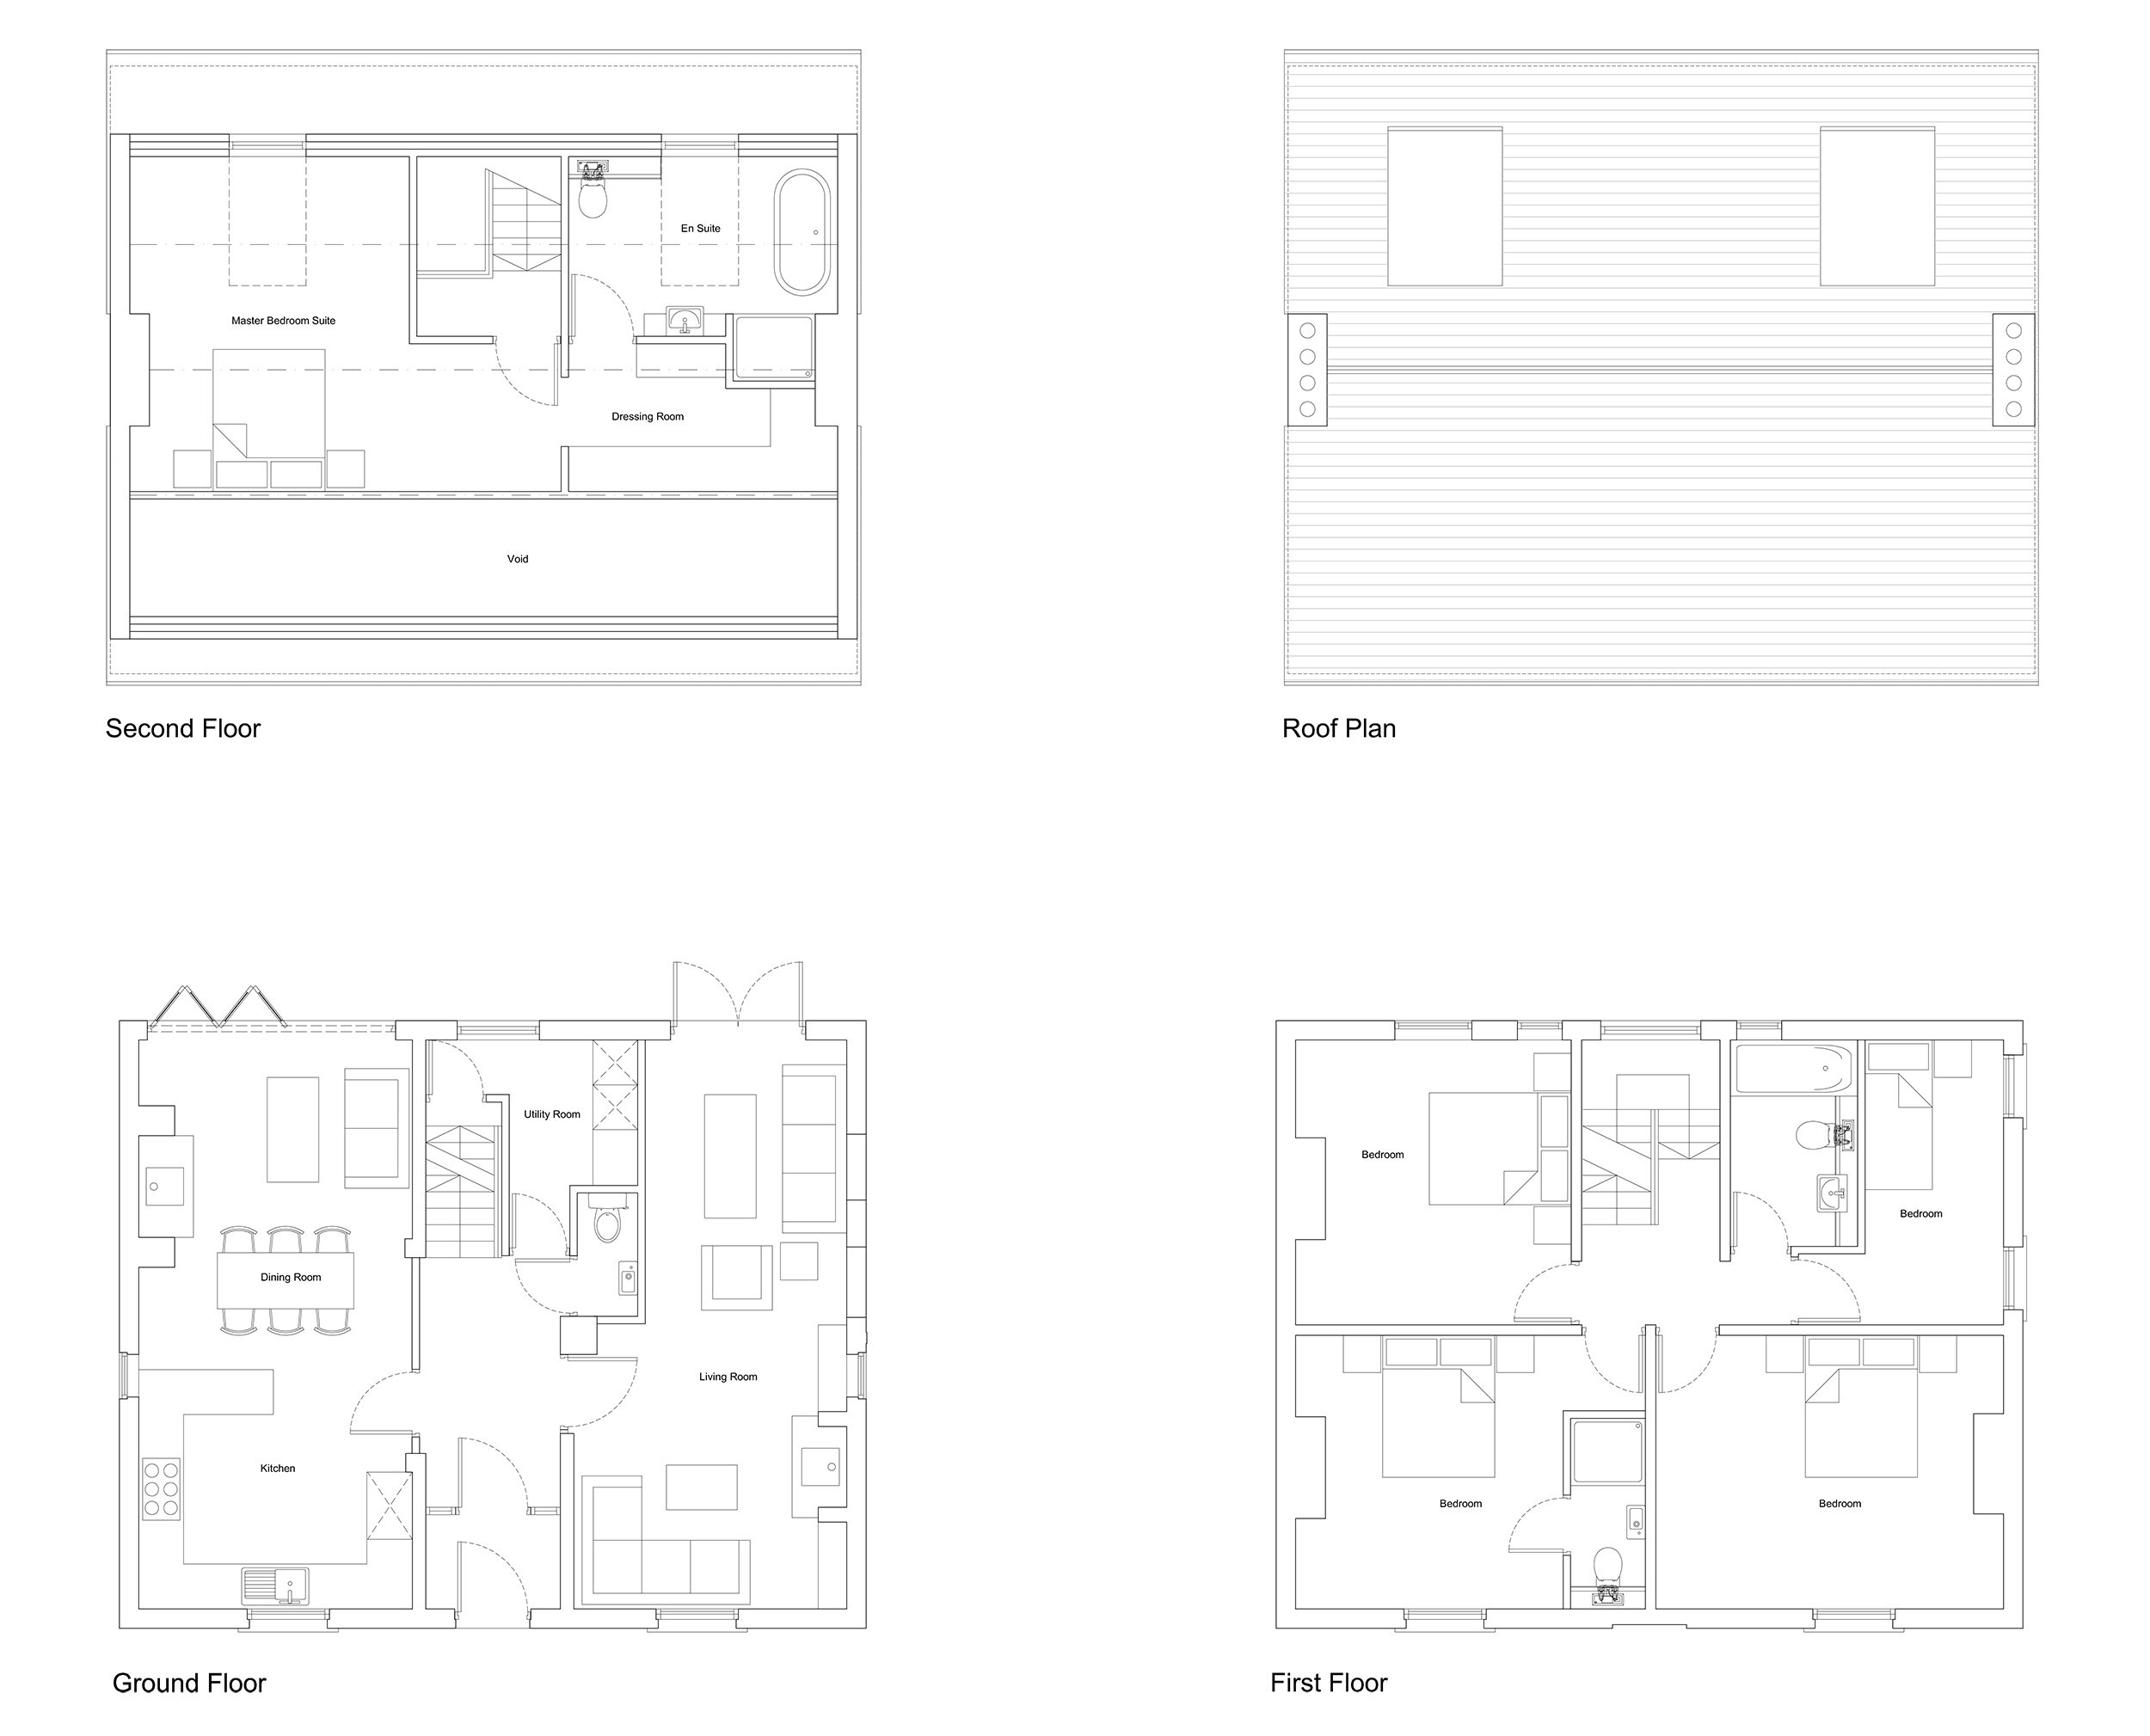 AL1.02 - Proposed Floor Plans - Unit 4 - Rev B.jpg